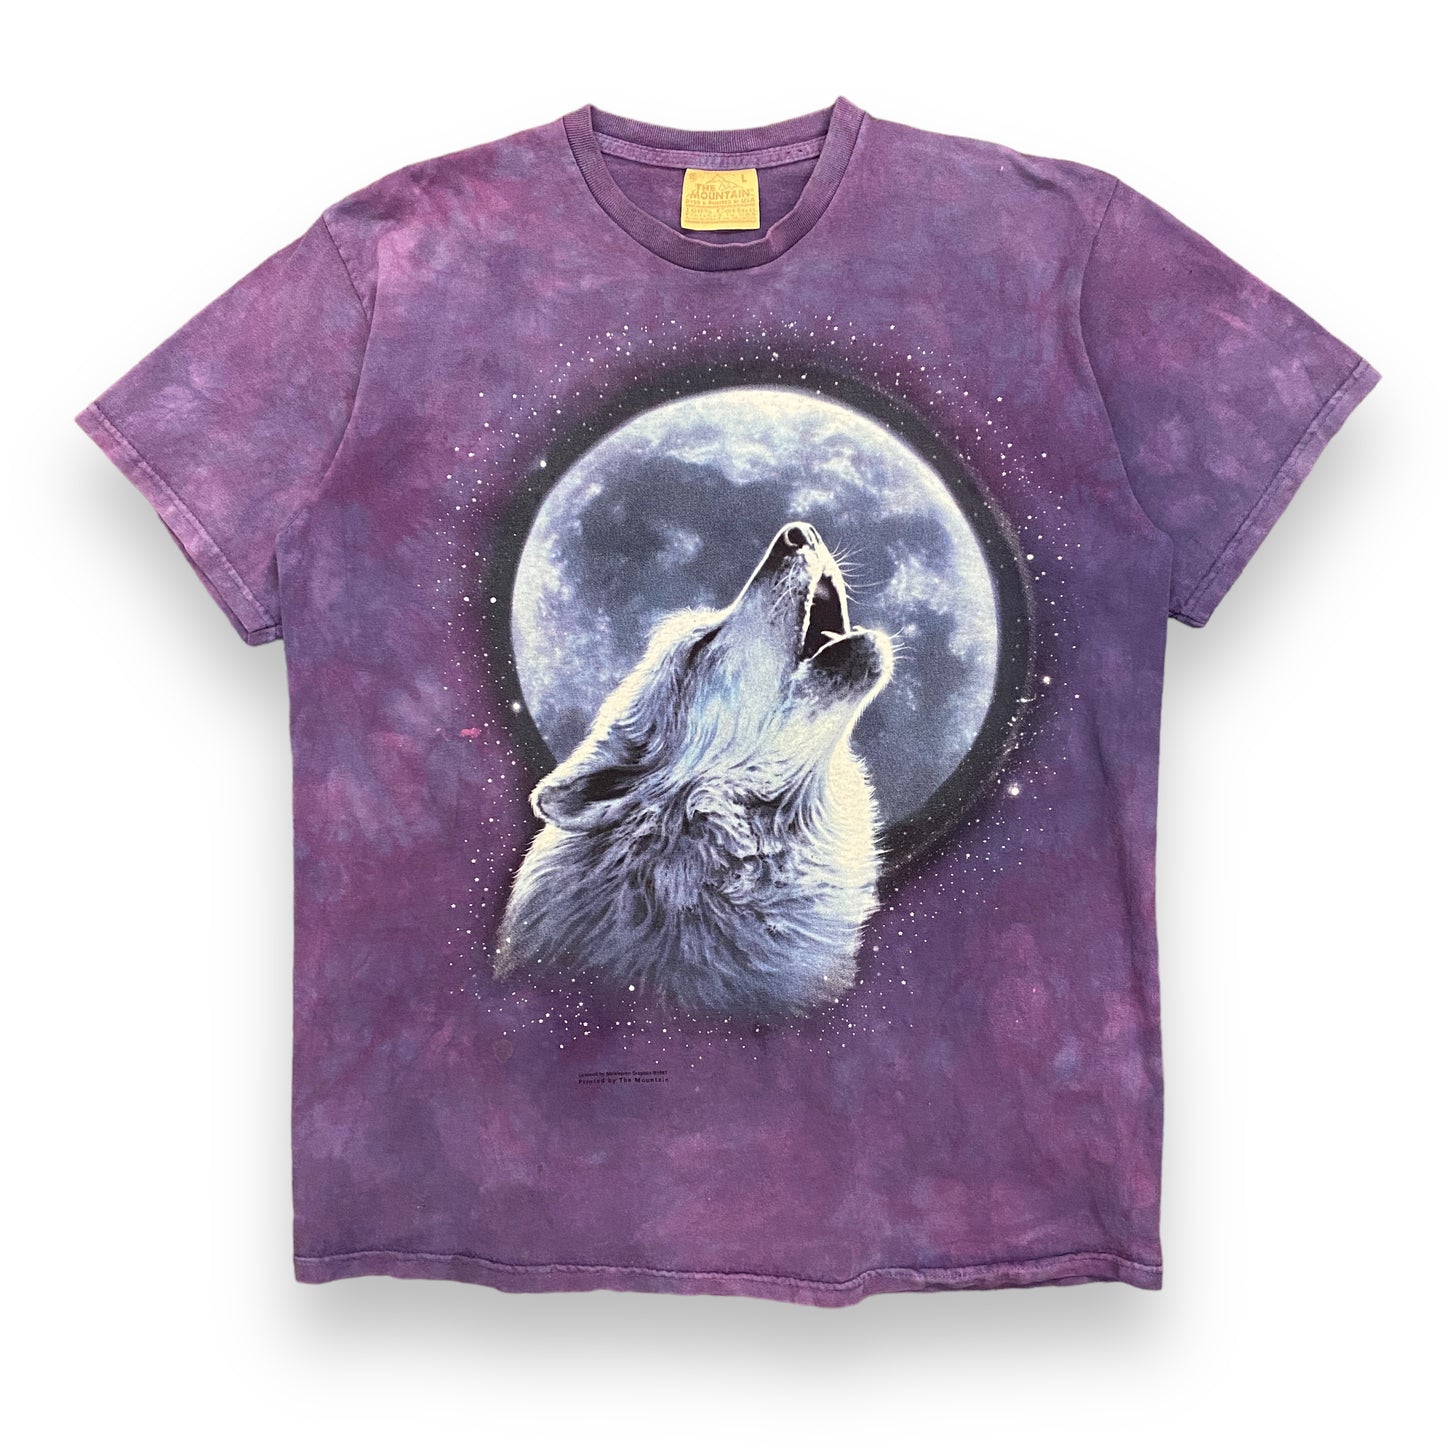 Vintage 1997 Howling Wolf Purple Tie Dye Tee - Size Large